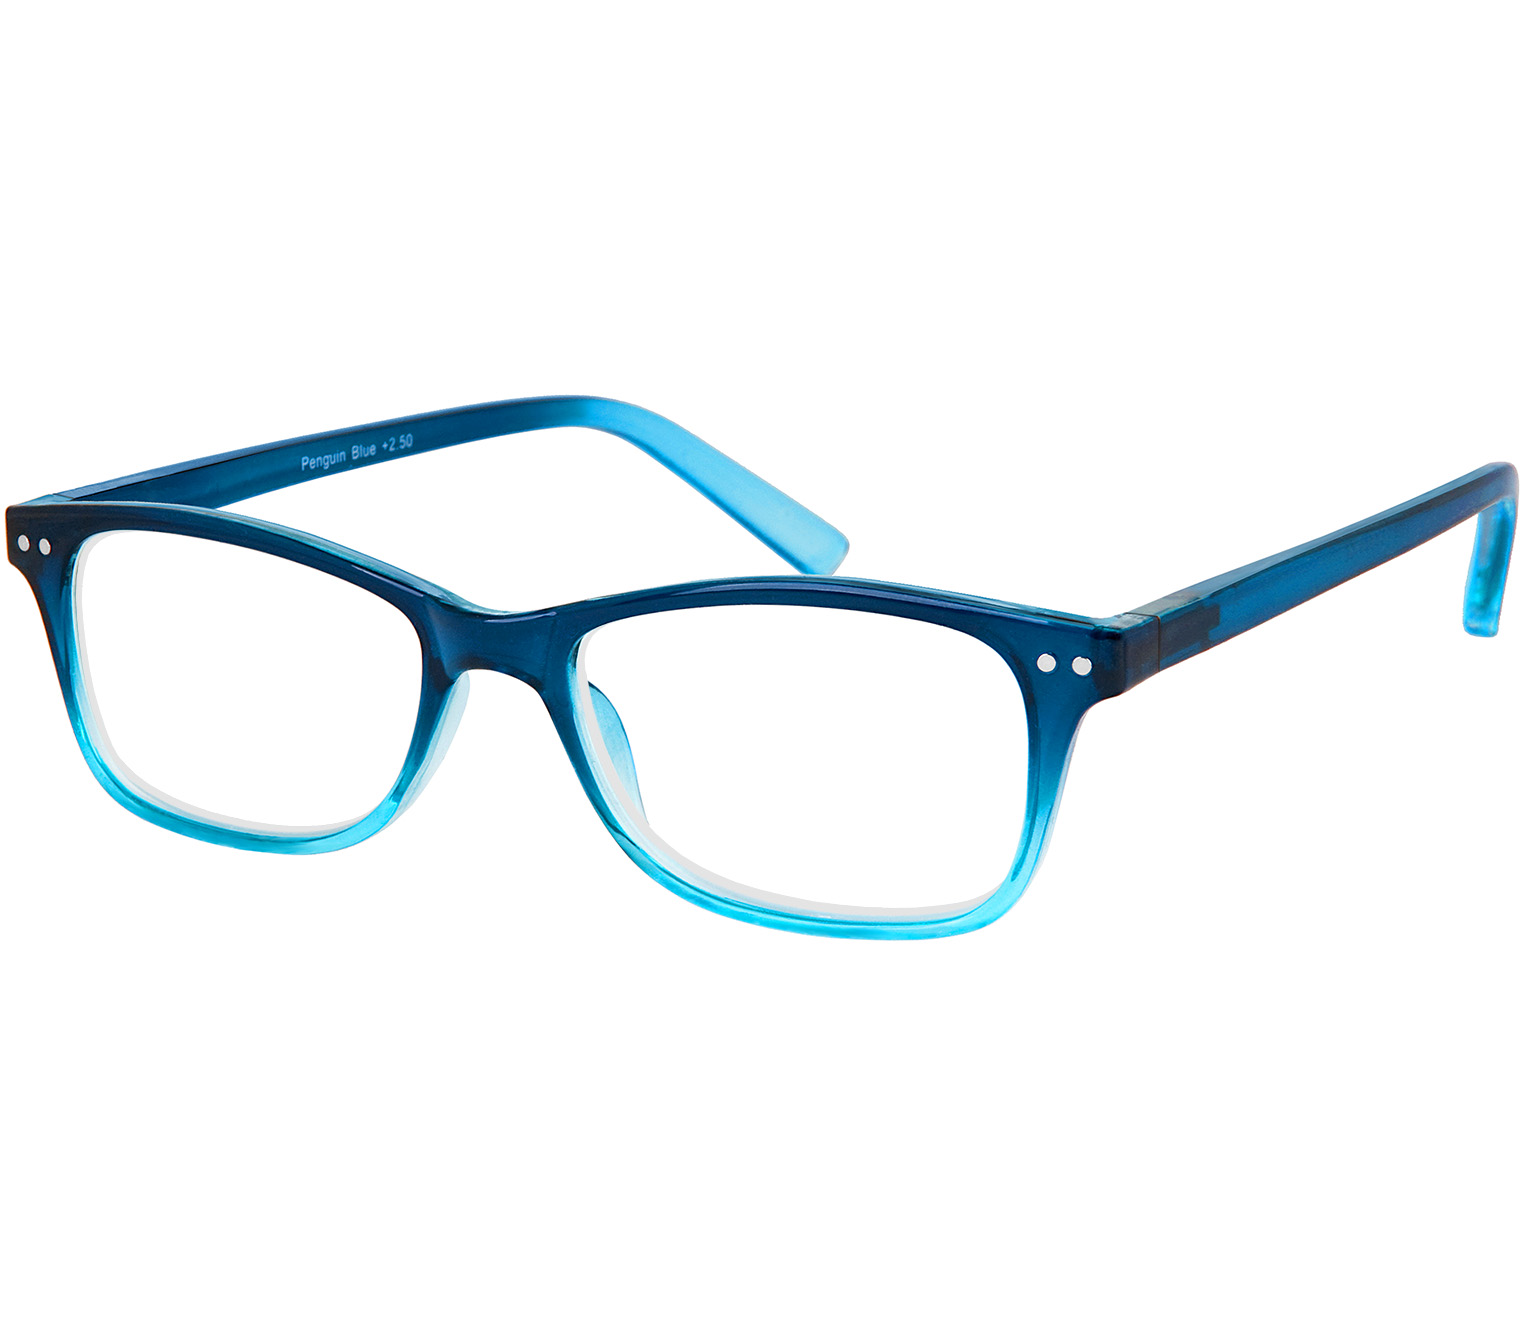 Penguin Blue Reading Glasses Tiger Specs